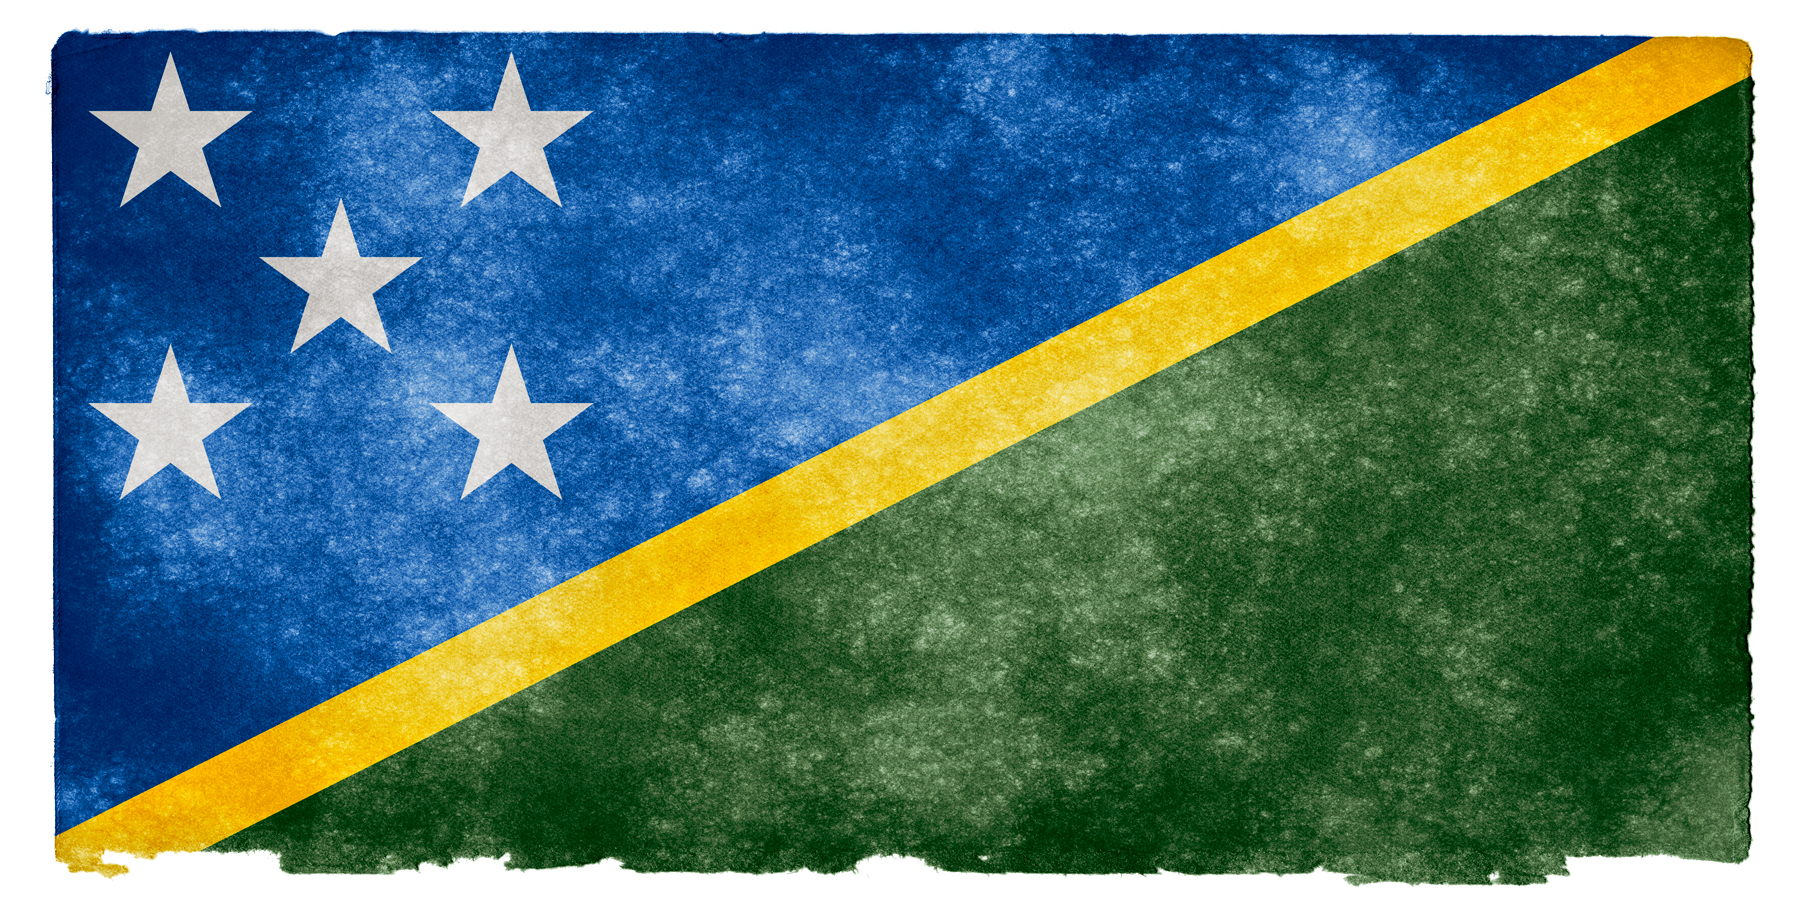 Solomon islands grunge flag photo